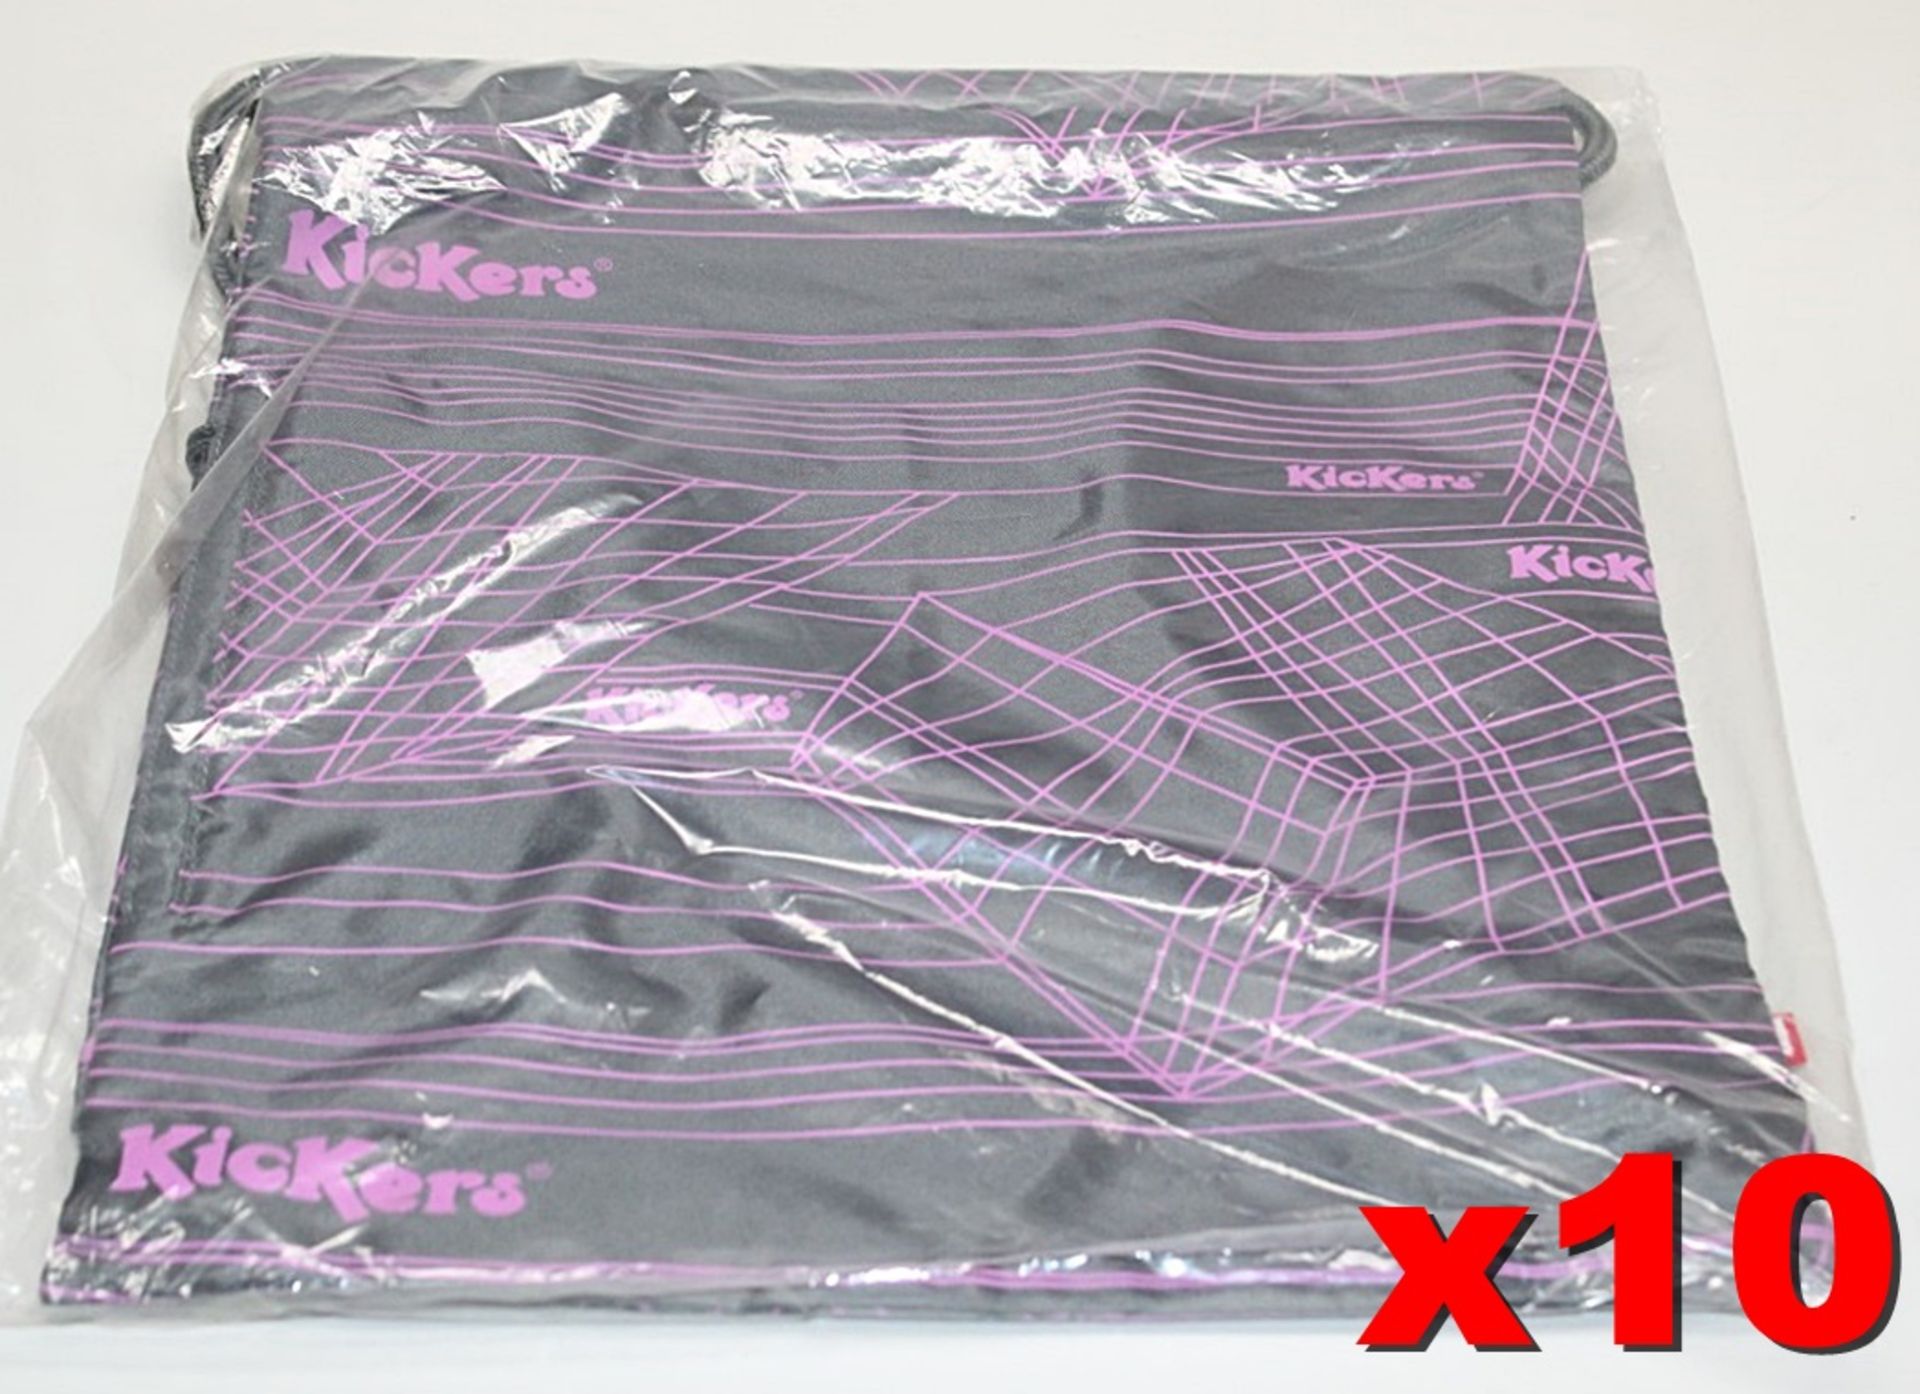 10 x Kickers Branded Drawstring Bags - Colour: Purple / Grey - Ref: JIM037 - Location: Altrincham